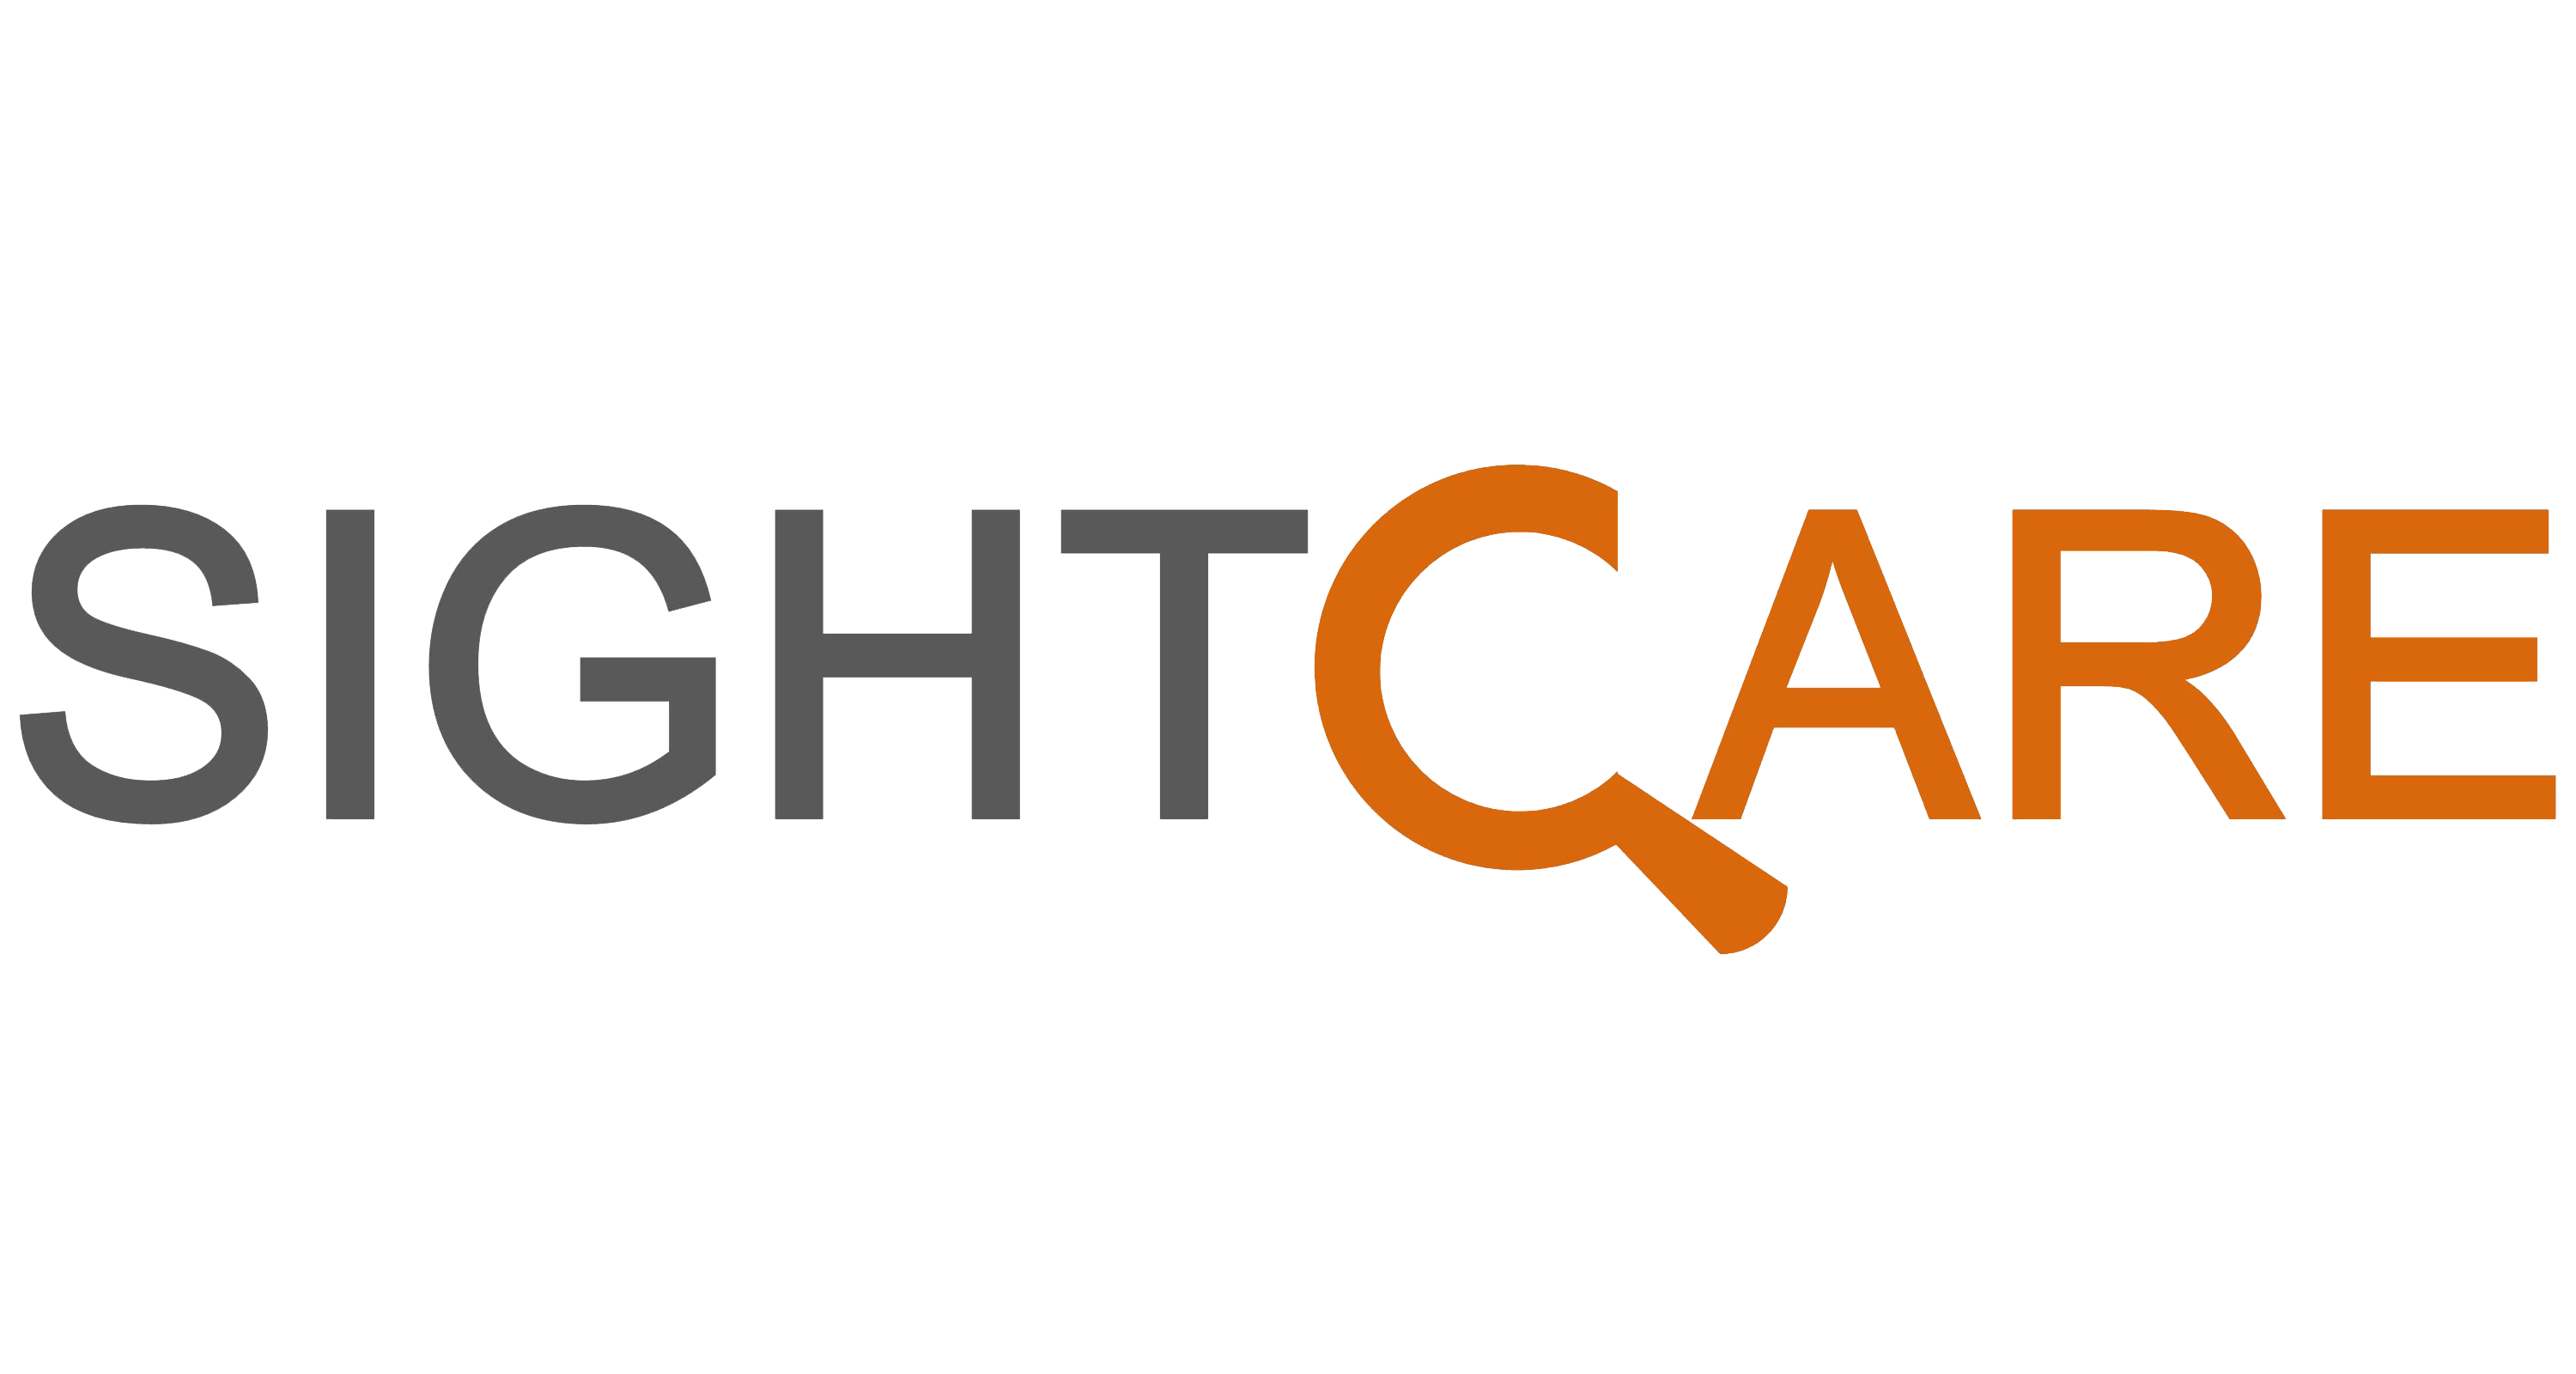 Sightcare logo